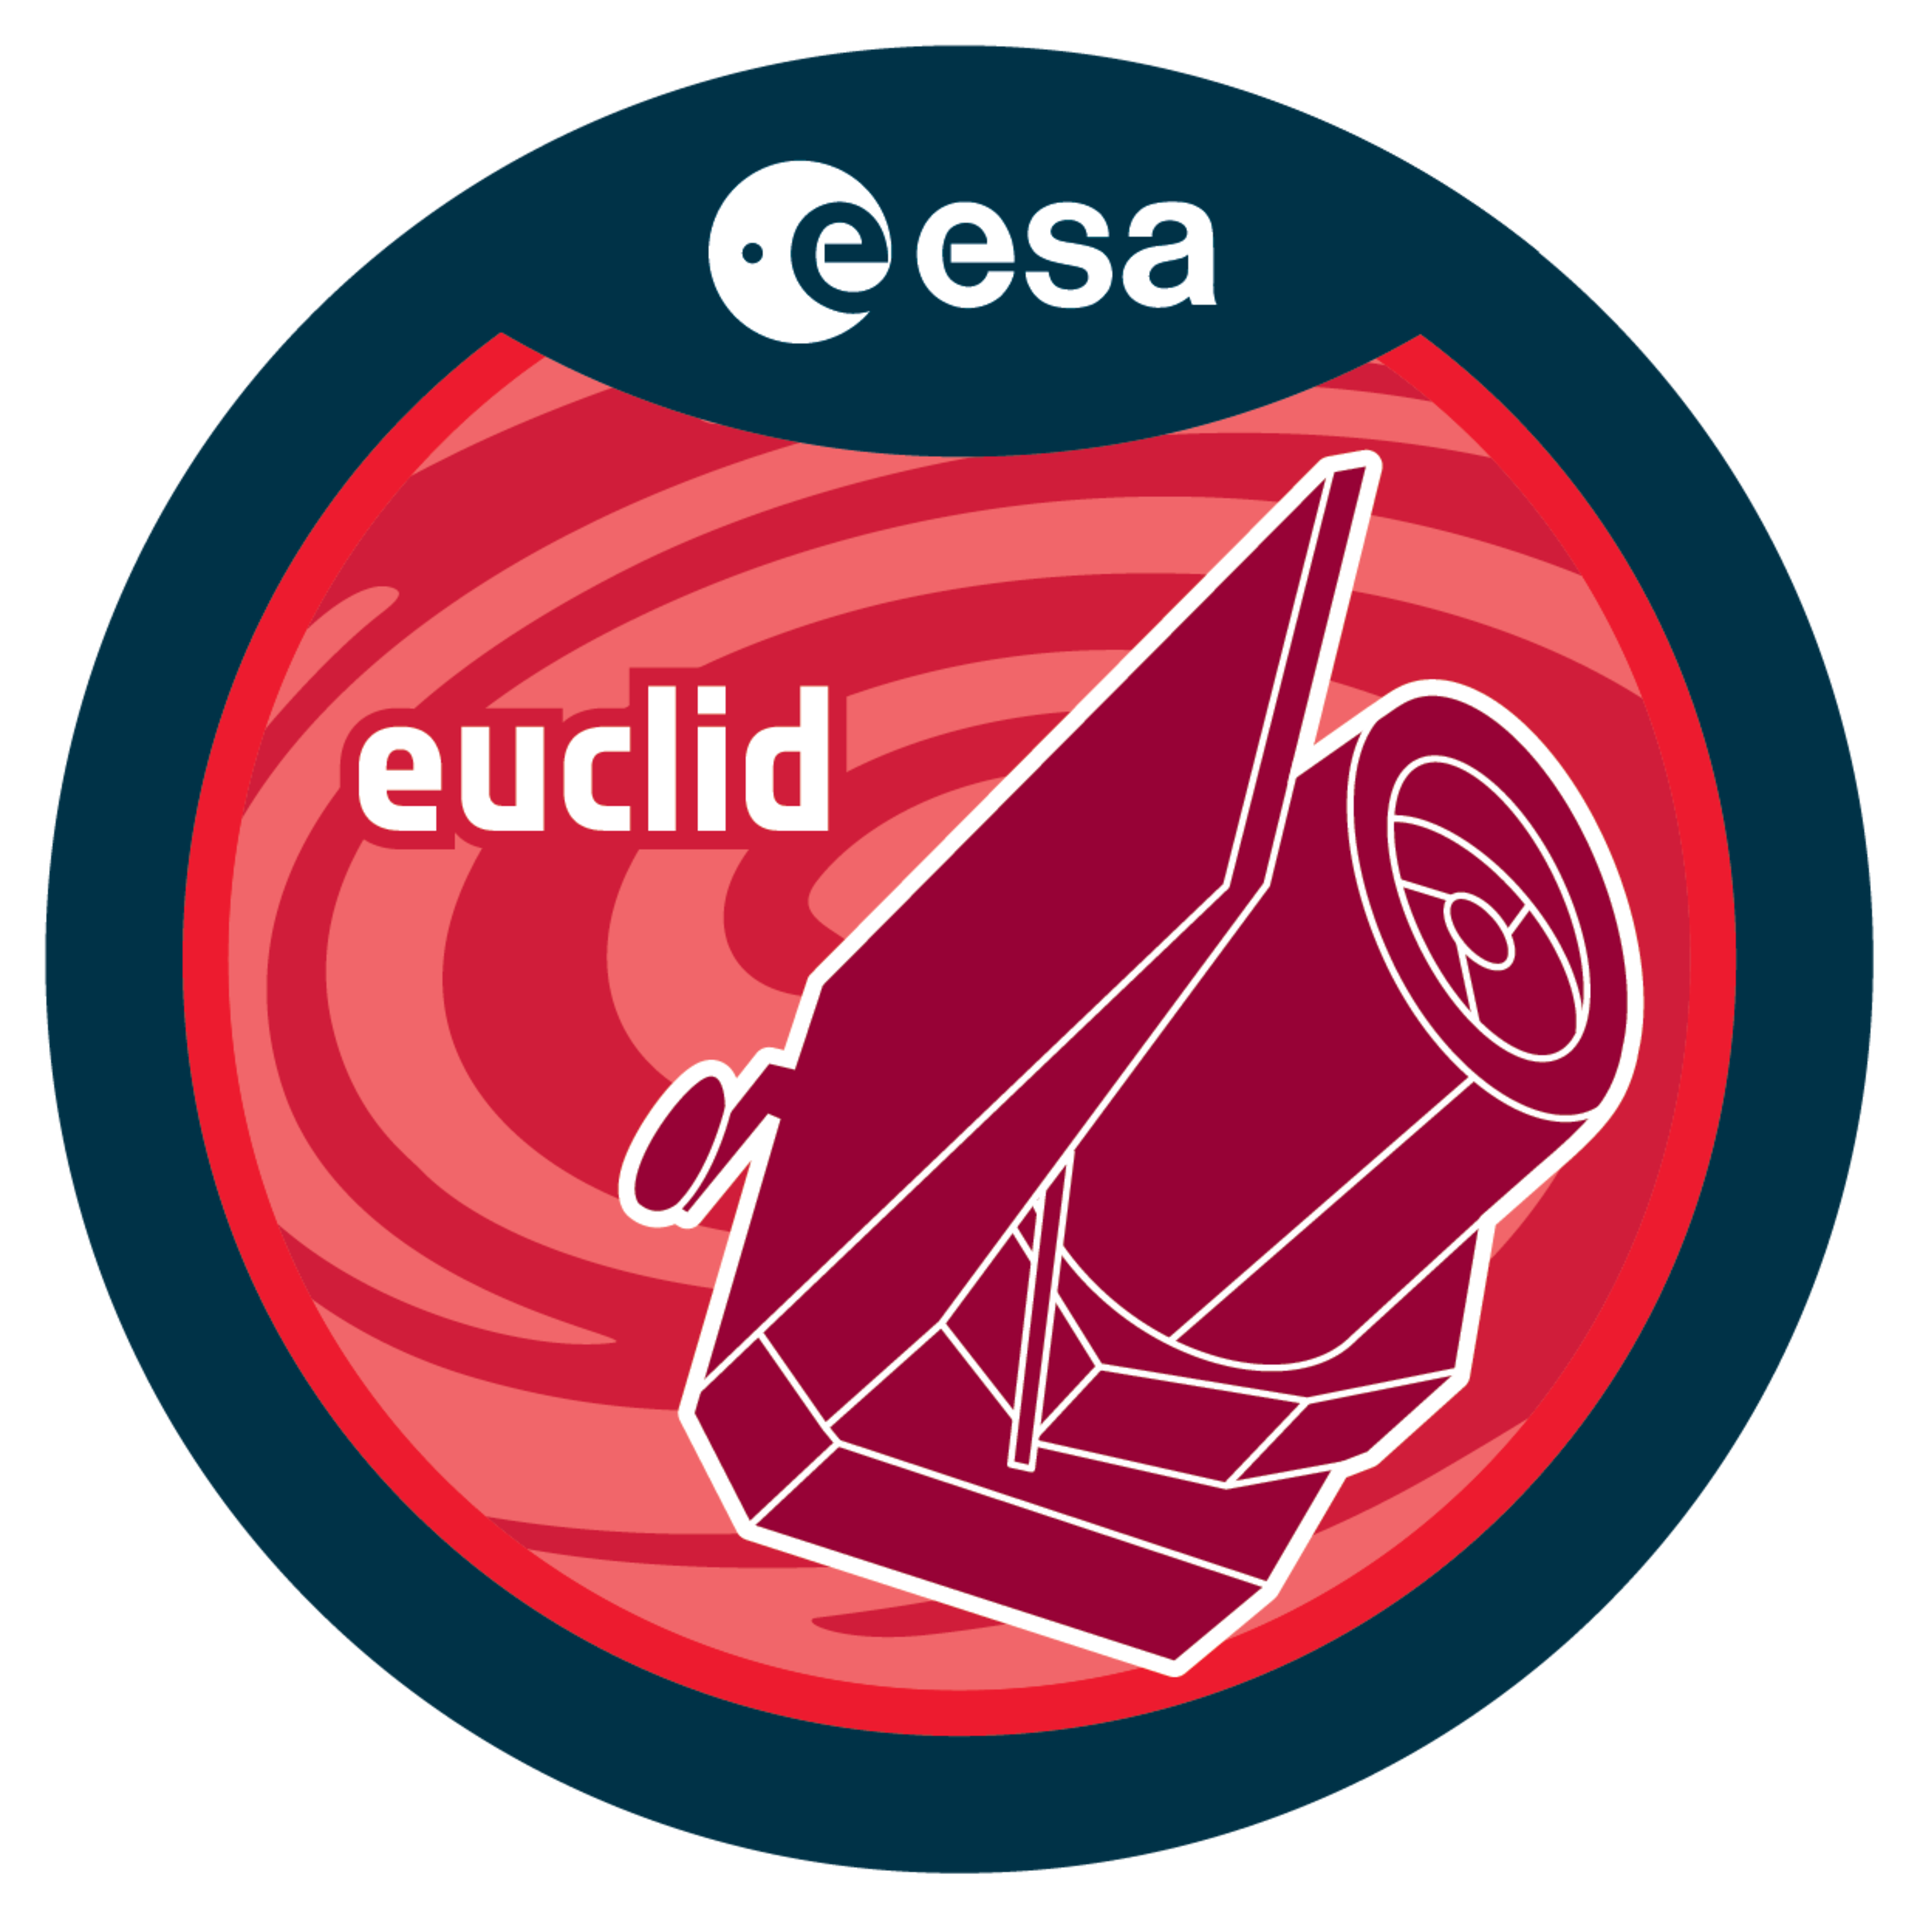 ESA Euclid